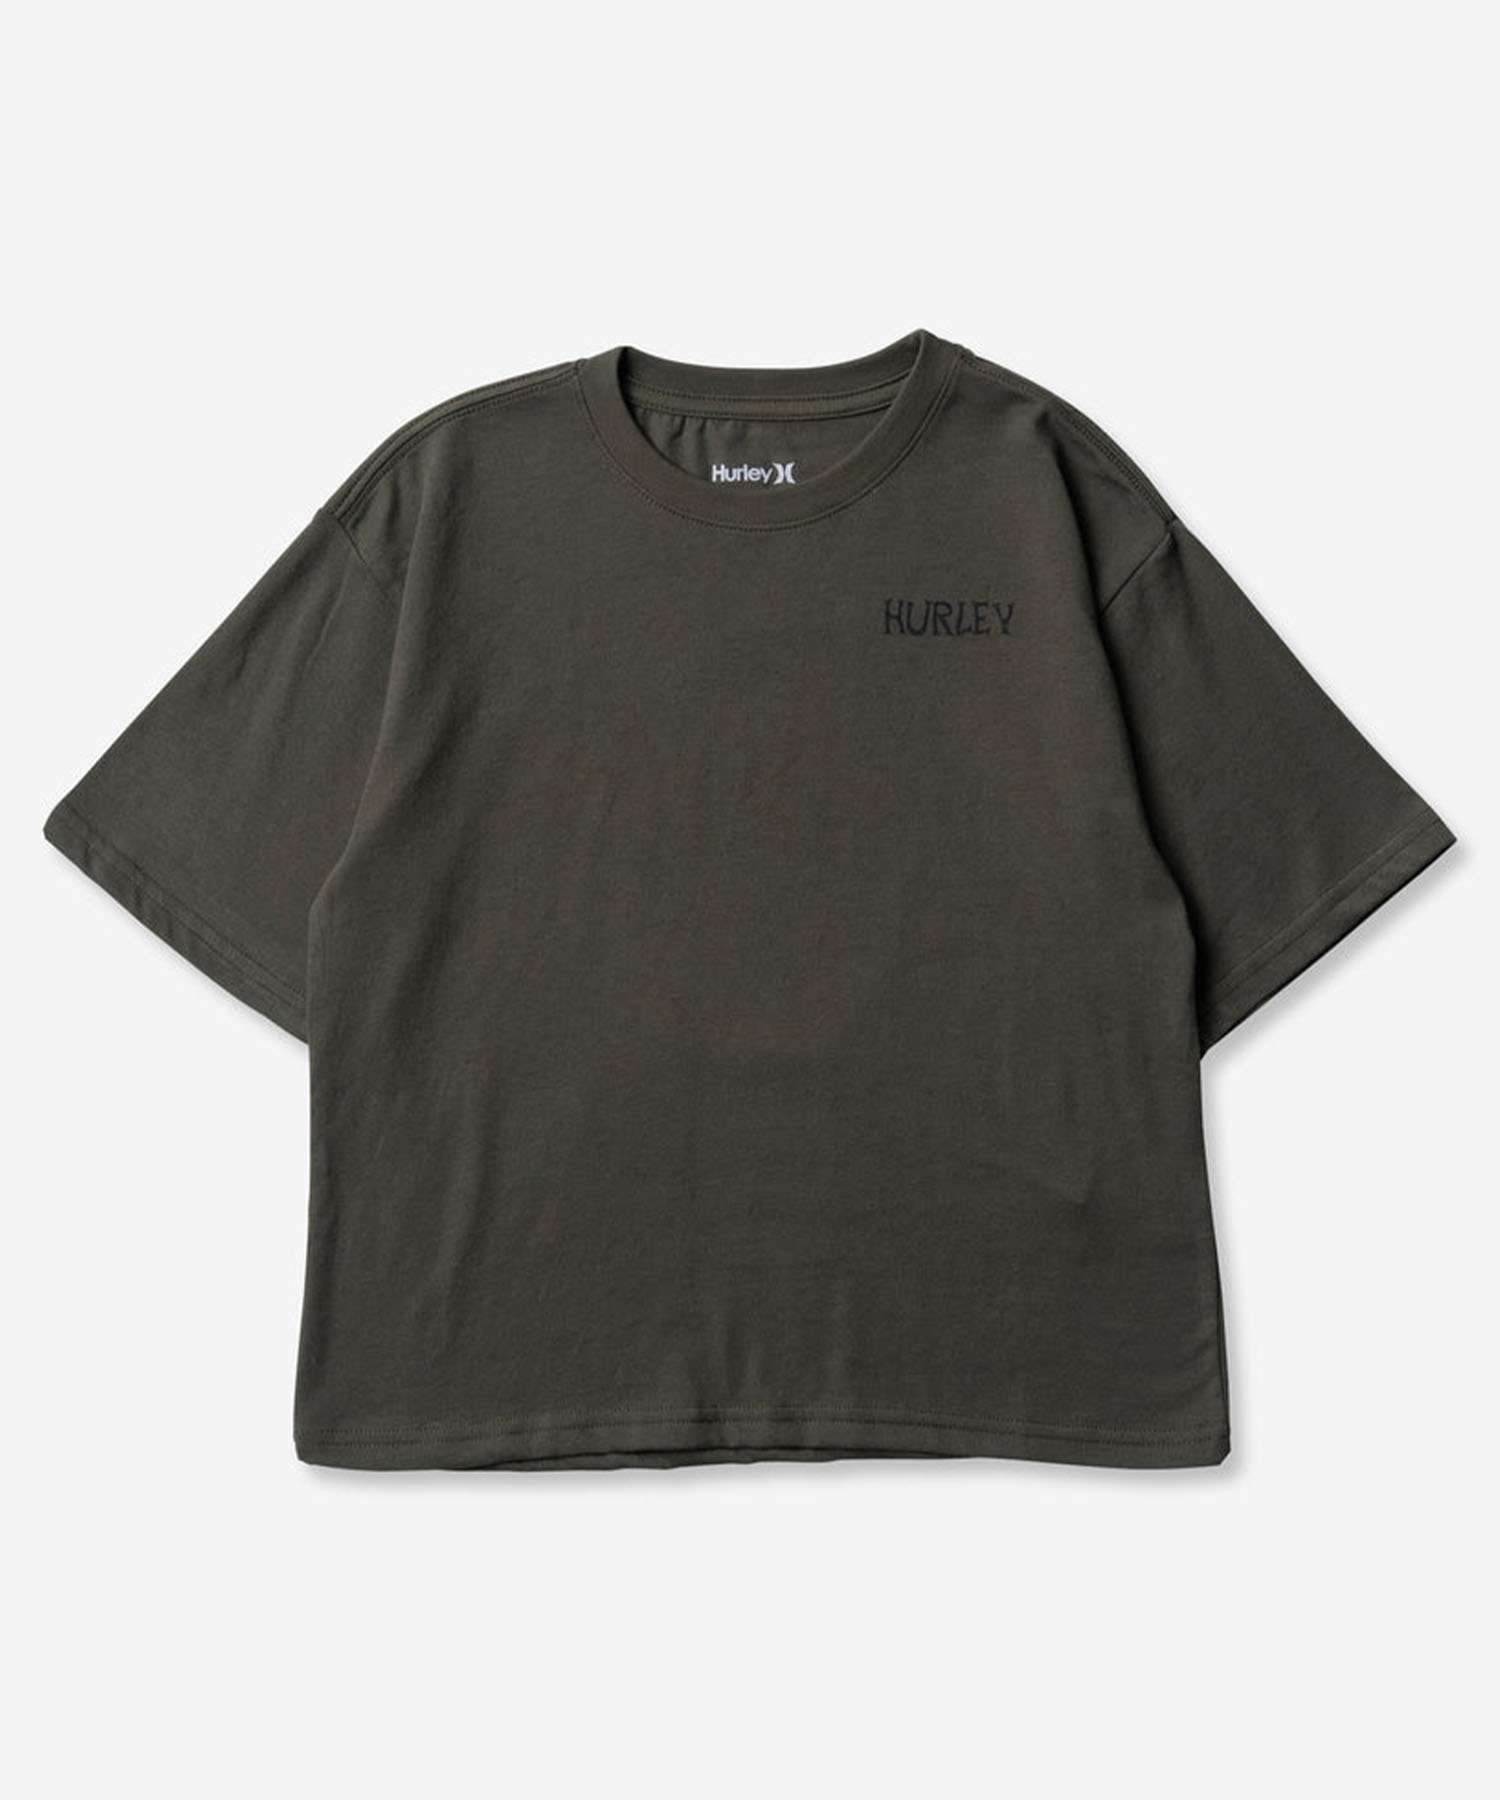 Hurley ハーレー BOYS OVERSIZE PIZZA SHORT SLEEVE TEE キッズ 半袖 Tシャツ BSS2431005(BLK-130cm)